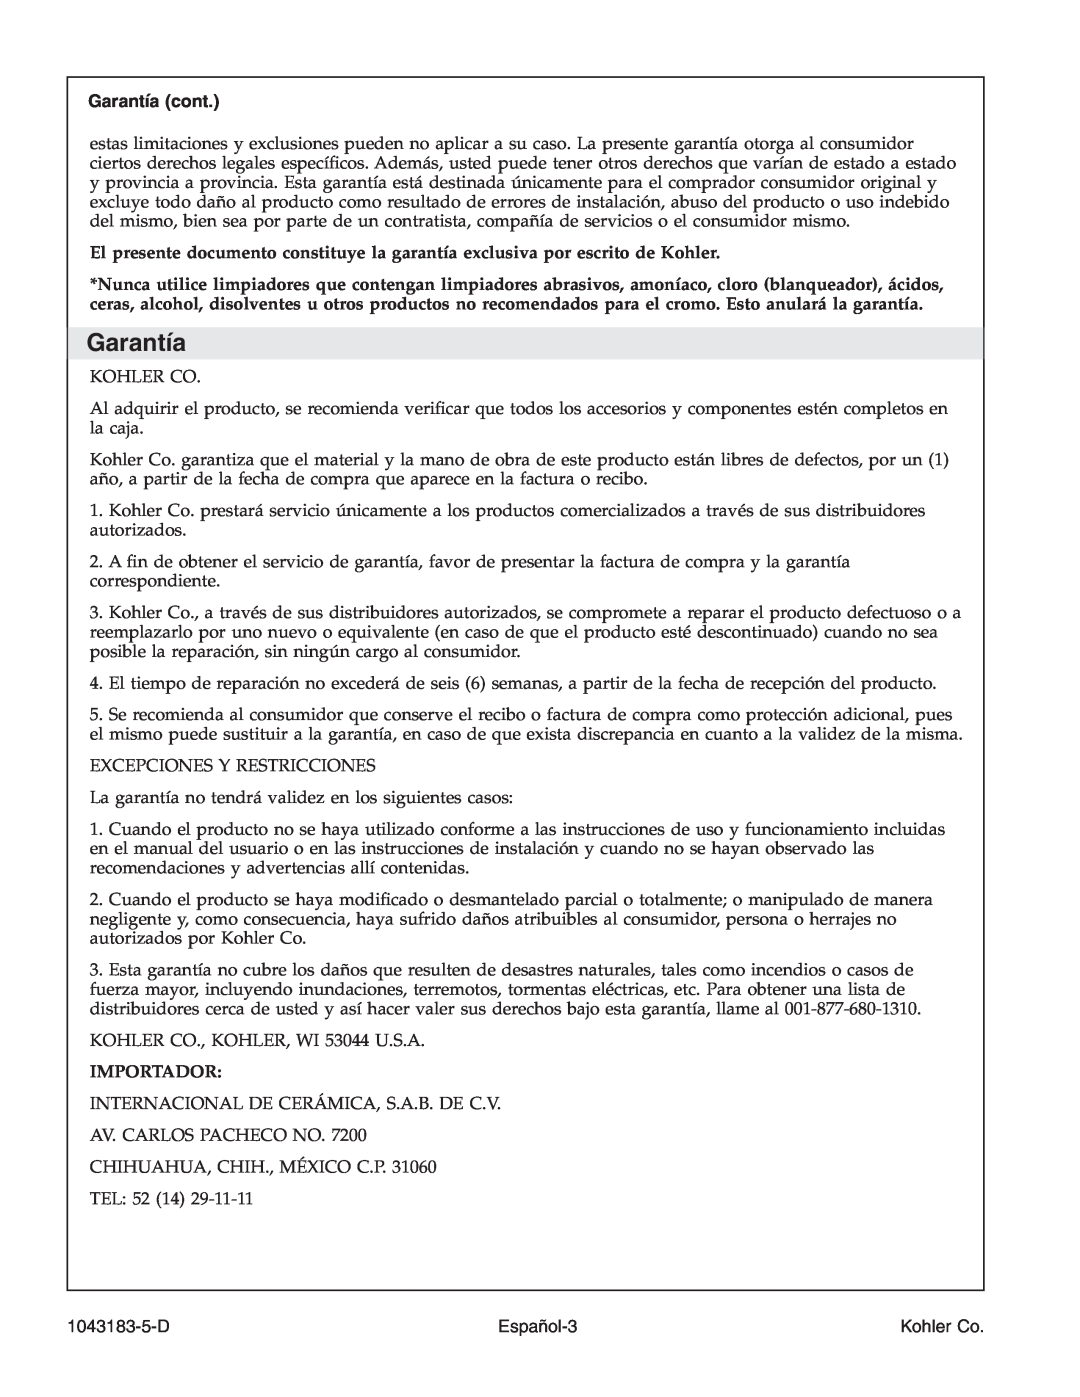 Kohler 1043183-5-D manual Garantía cont, Español-3, Kohler Co 